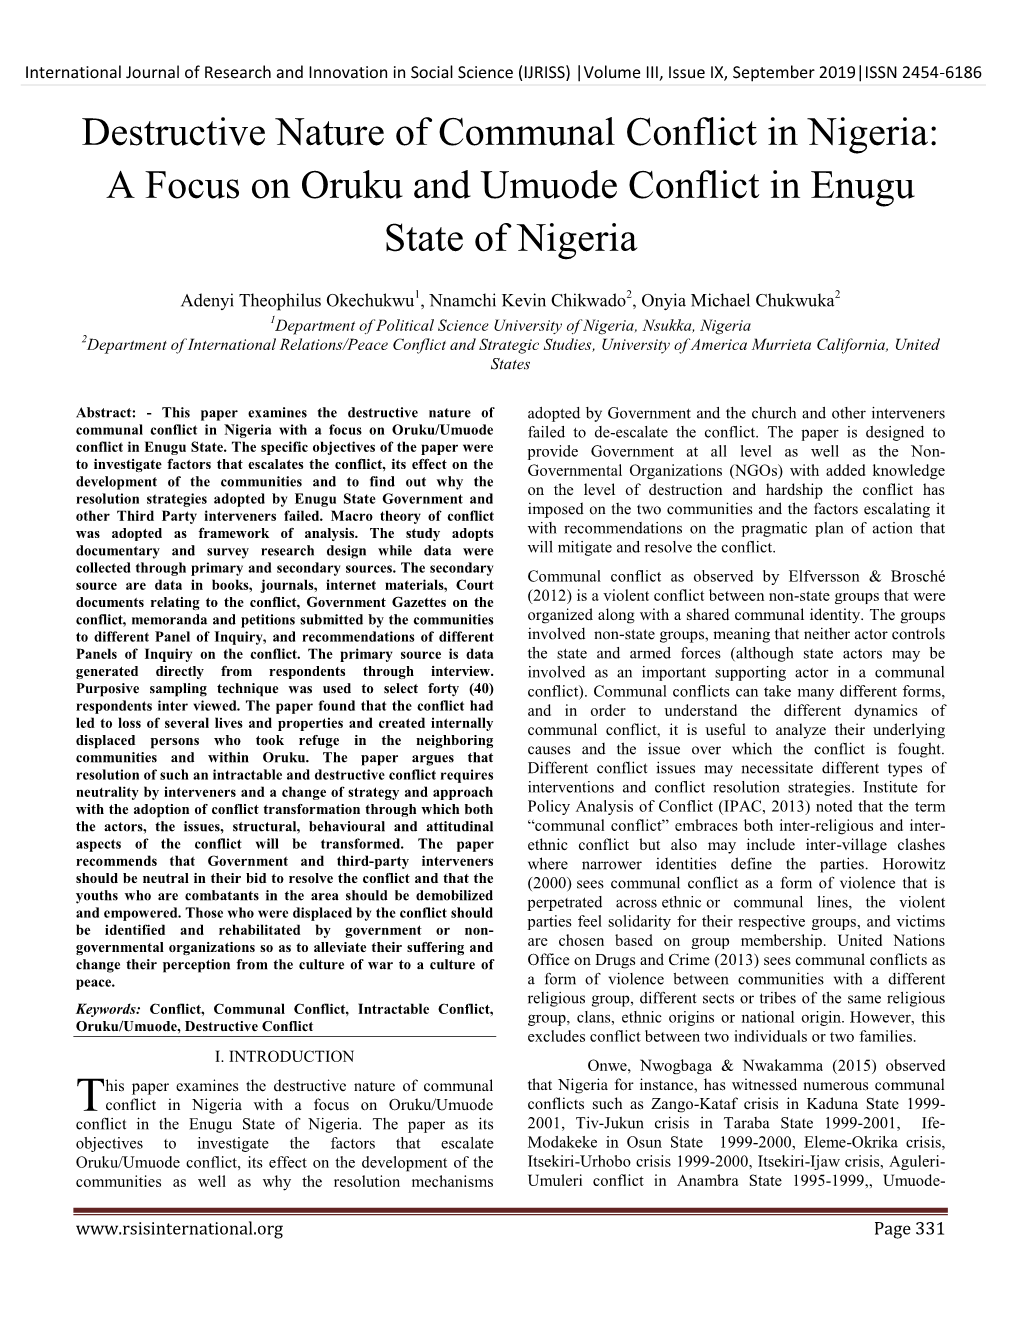 A Focus on Oruku and Umuode Conflict in Enugu State of Nigeria